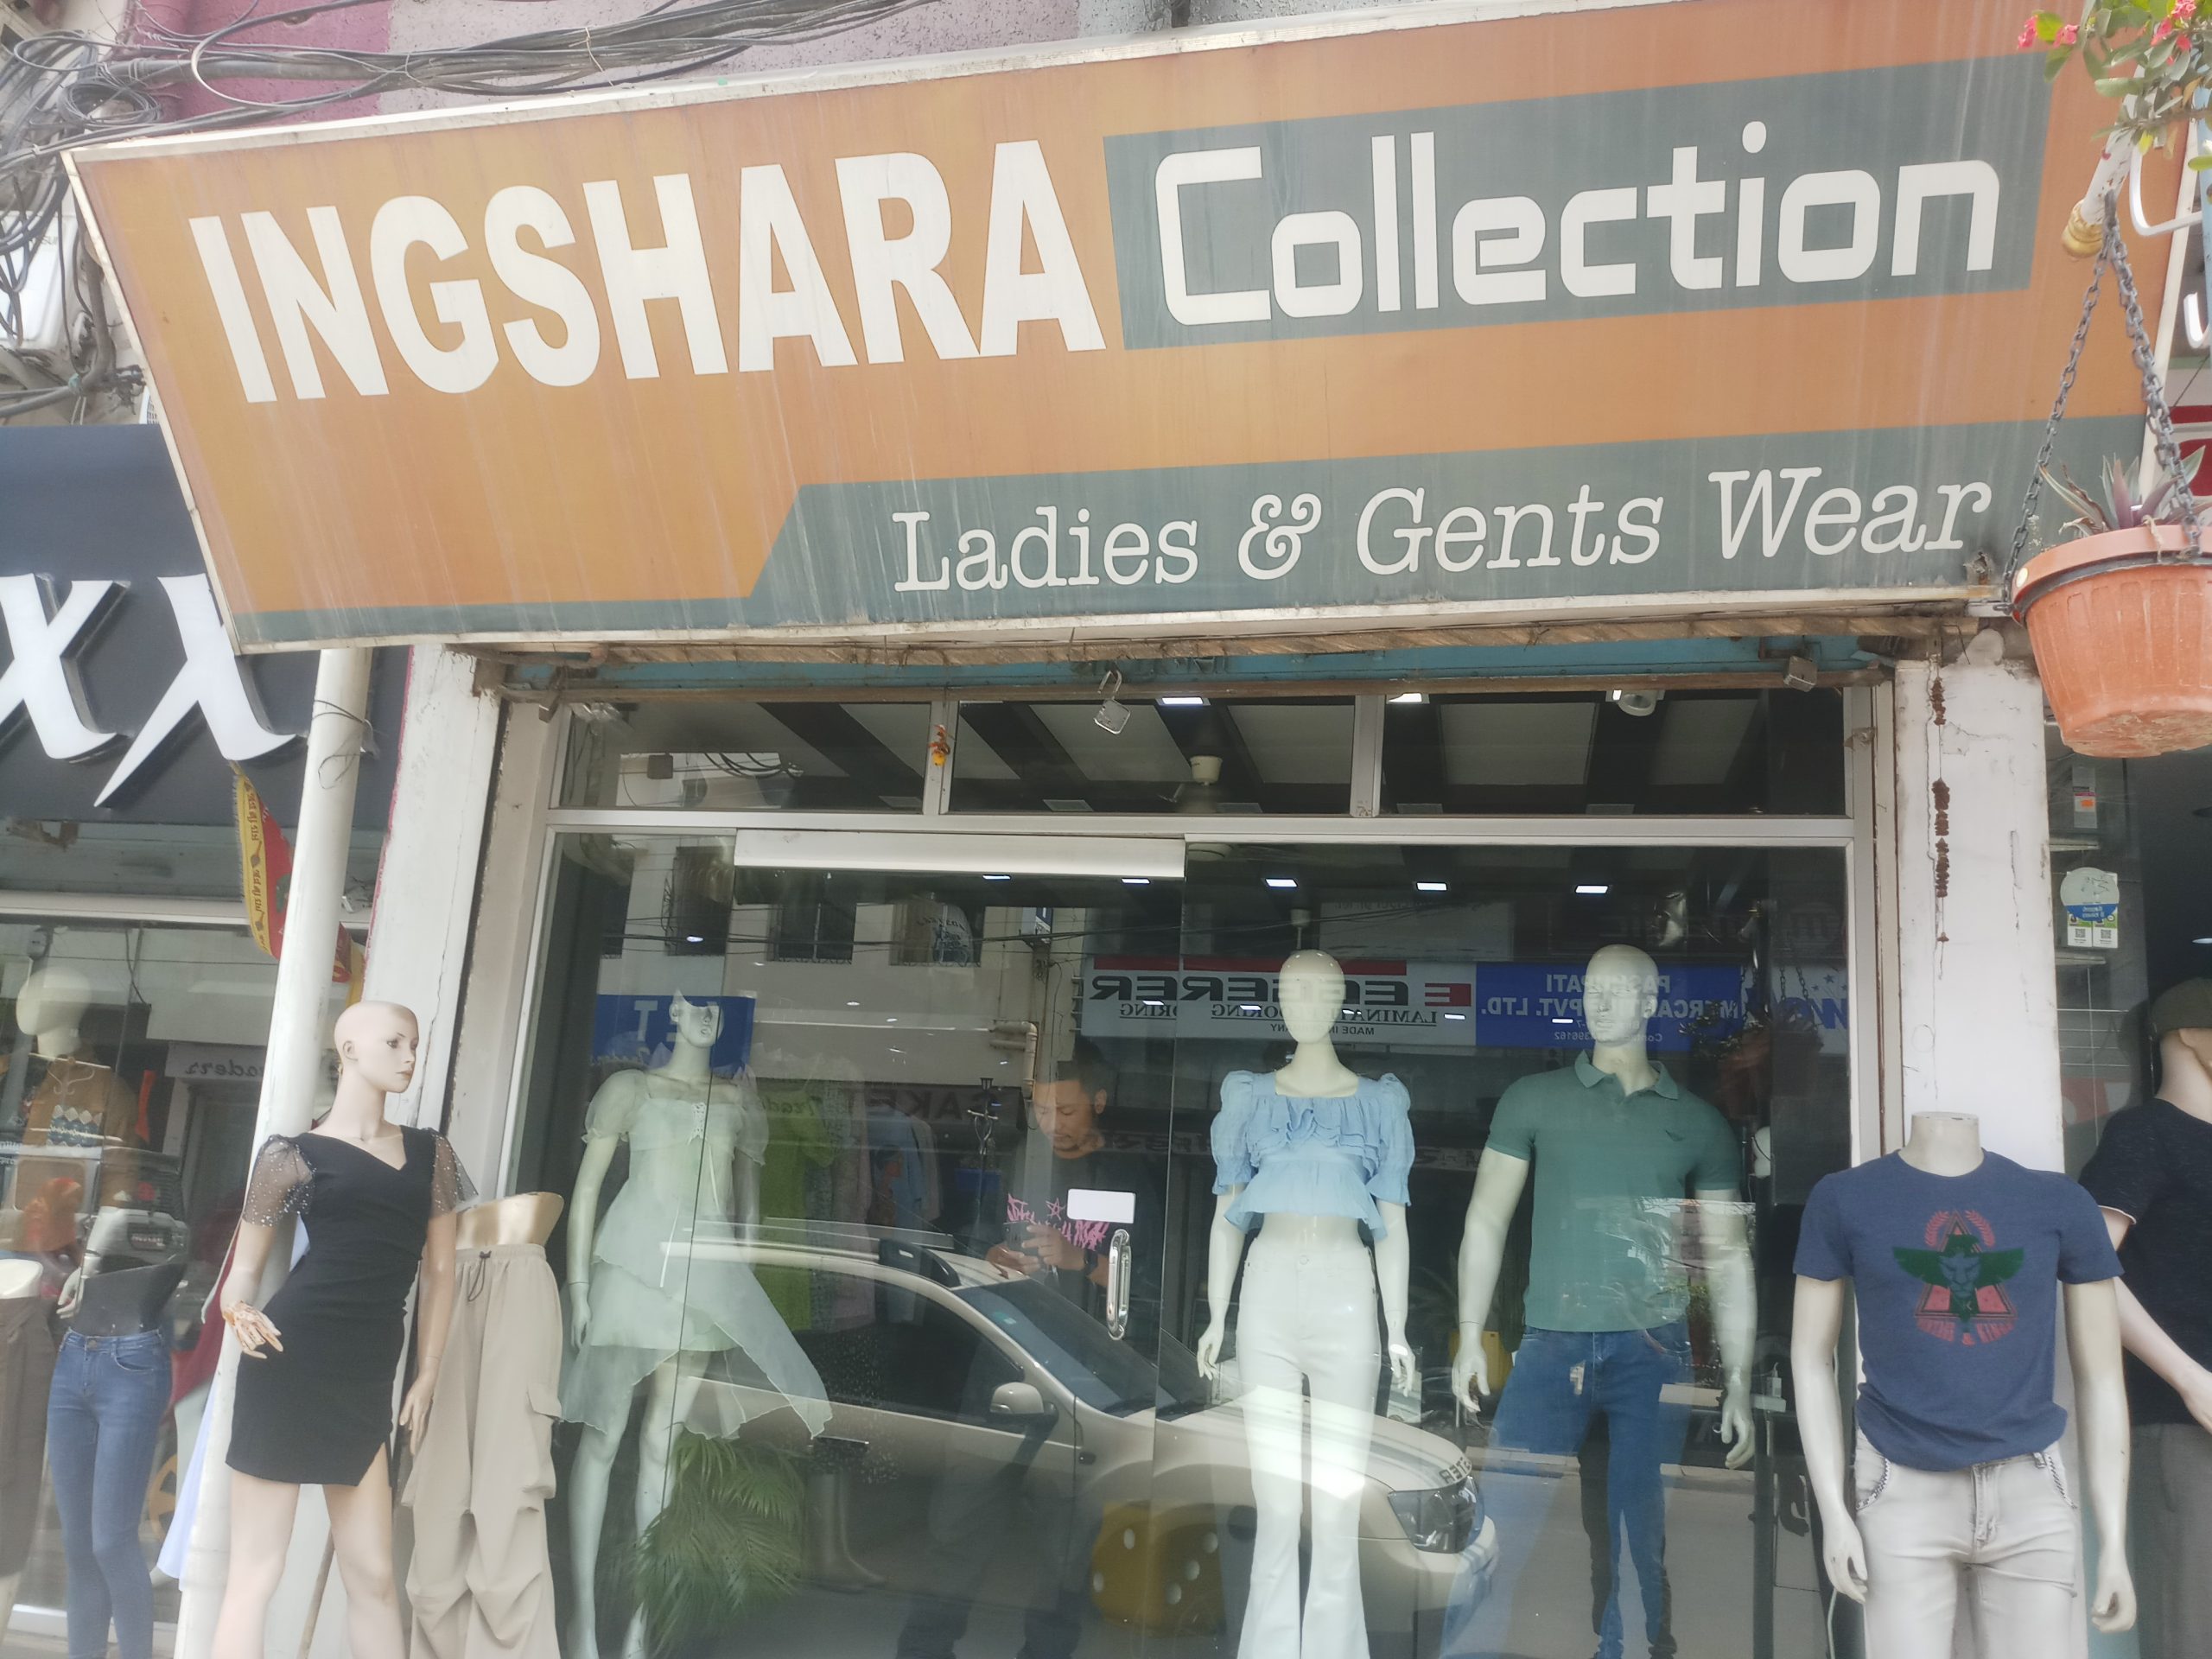 Ingshara Collection